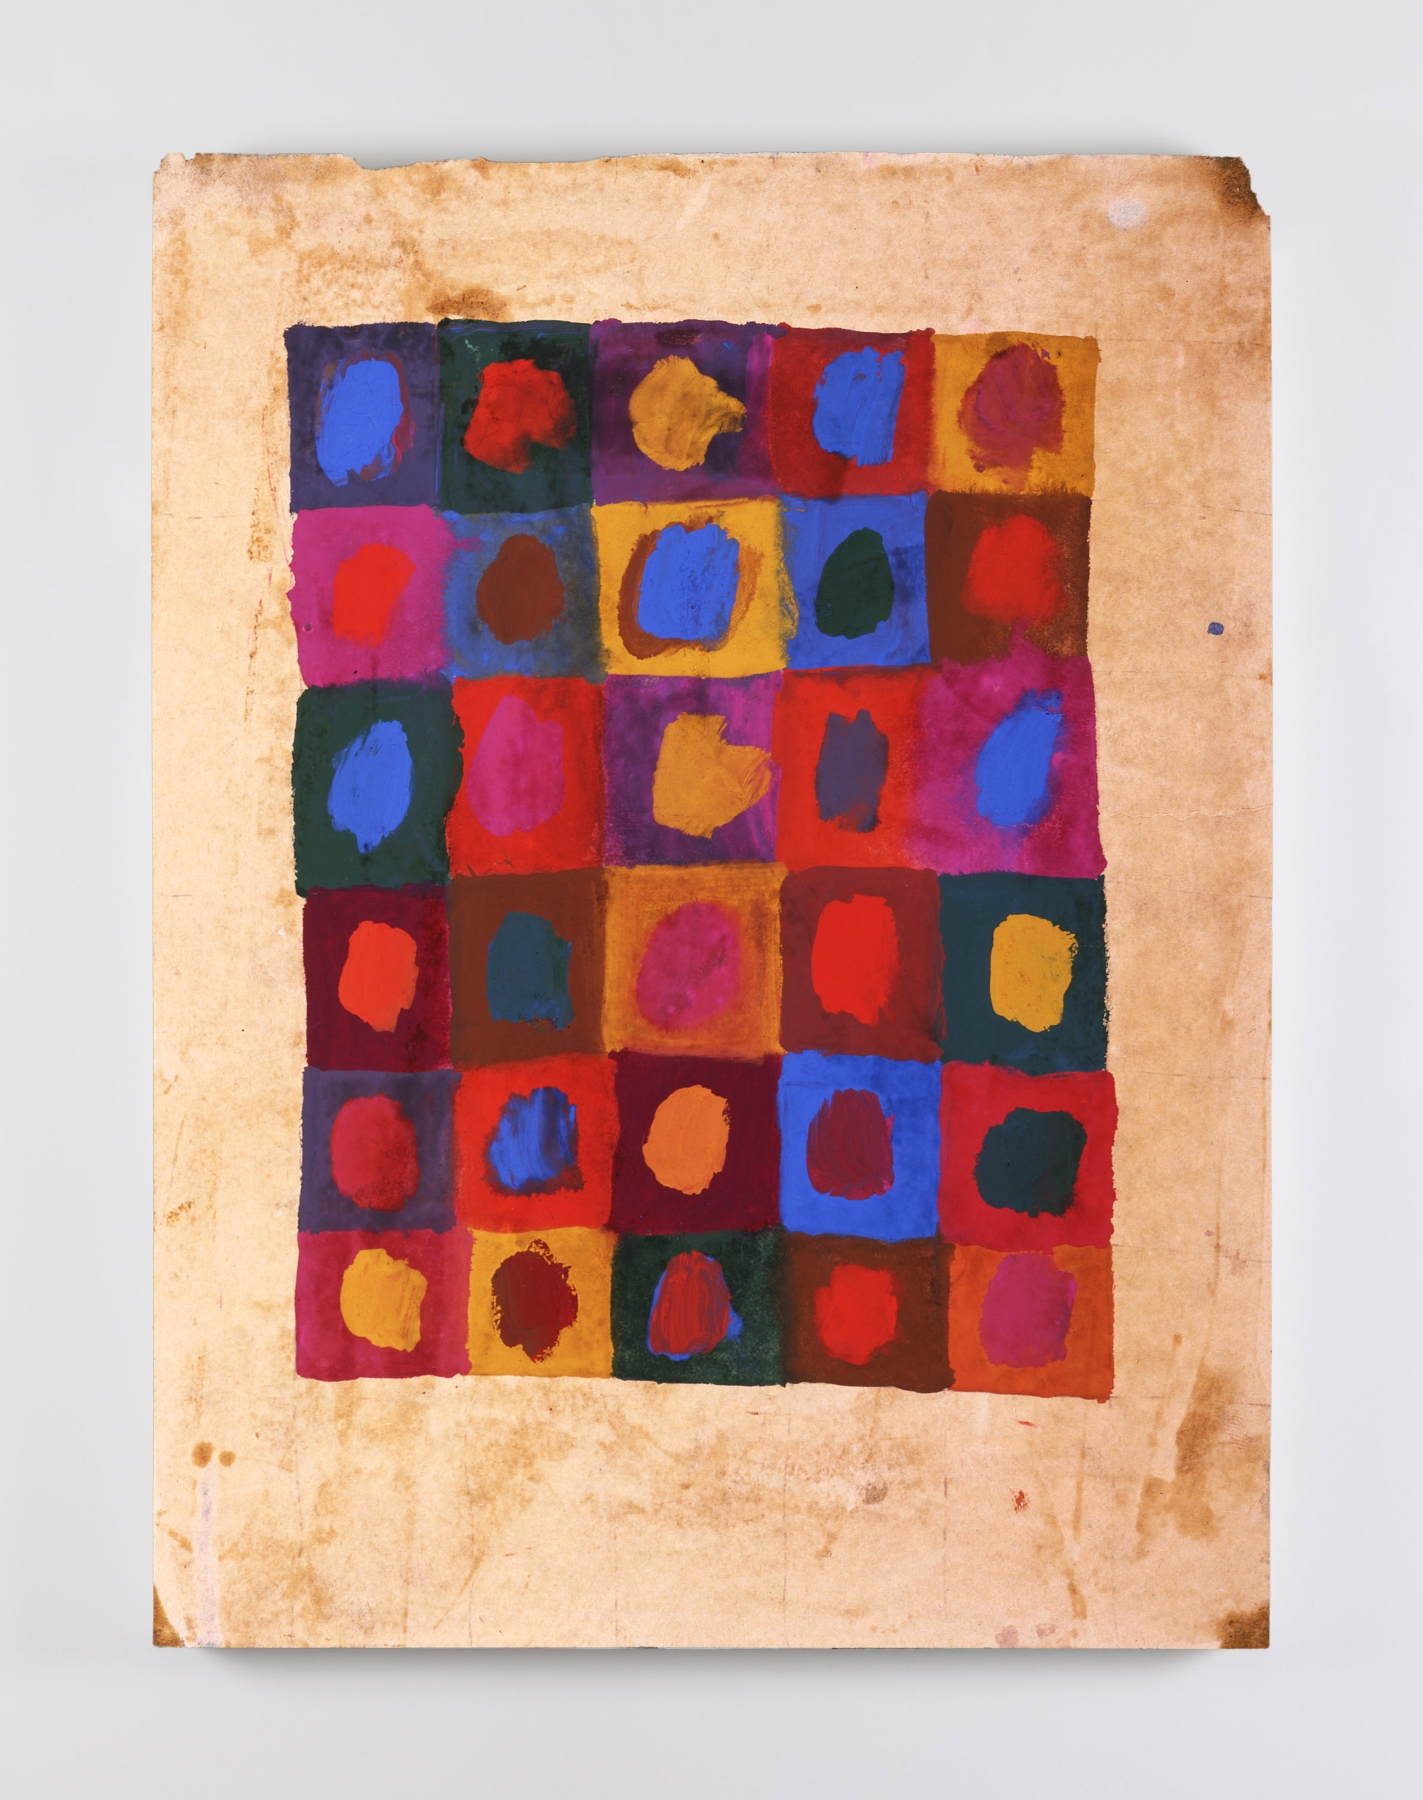 Untitled&nbsp;
1968
Gouache on paper
30.5 x 22.9 cm / 12 x 9 in&nbsp;